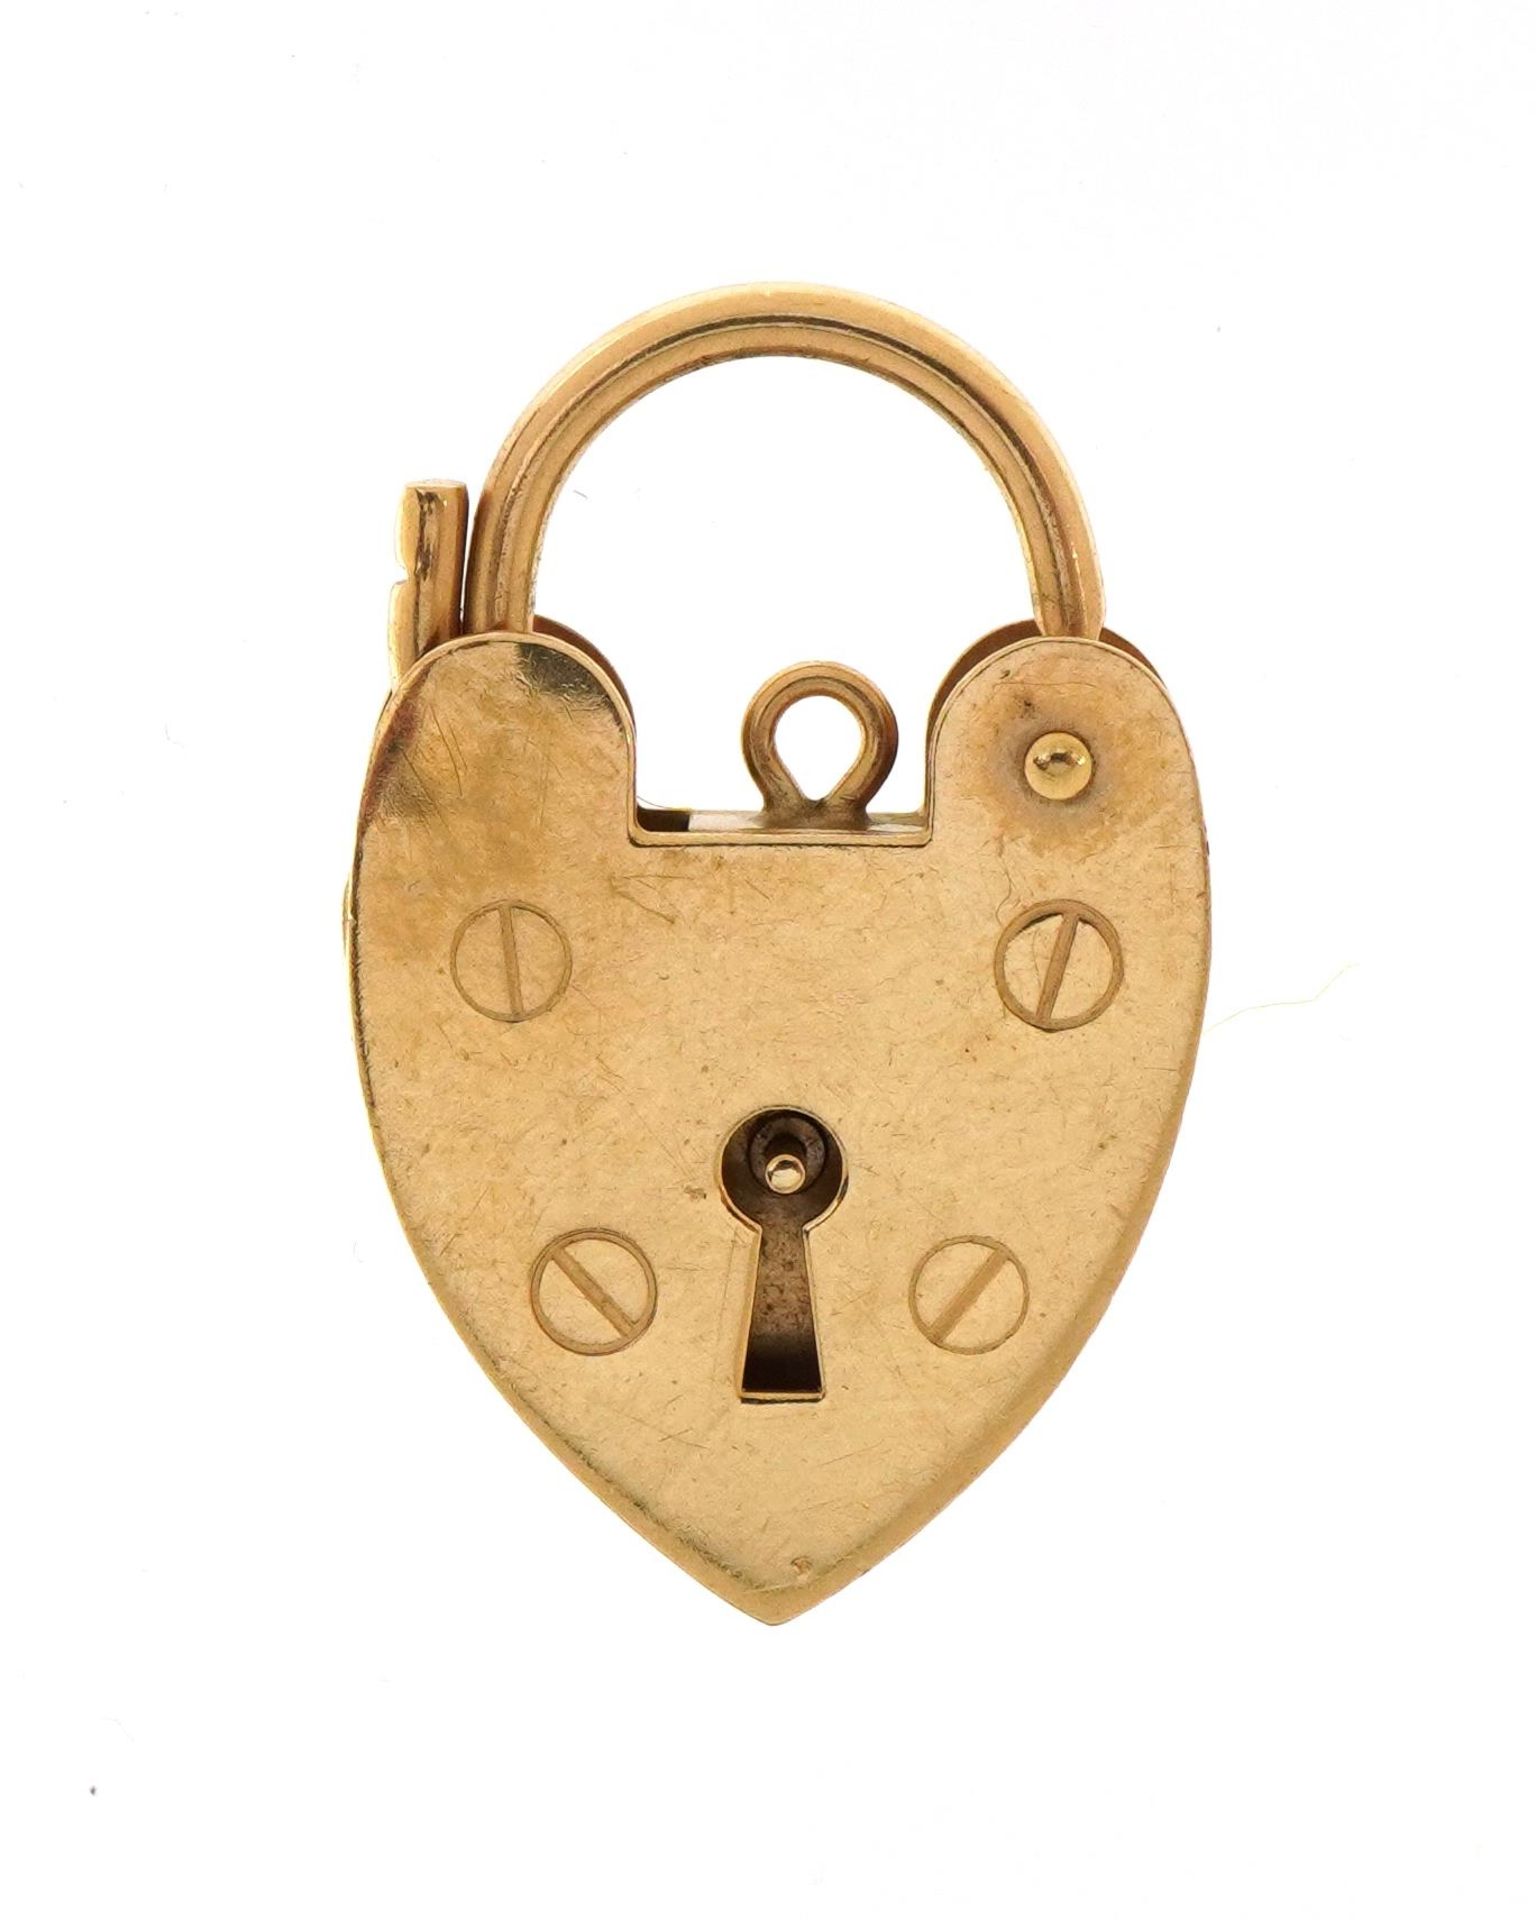 9ct gold love heart padlock, 2.6cm high, 2.6g